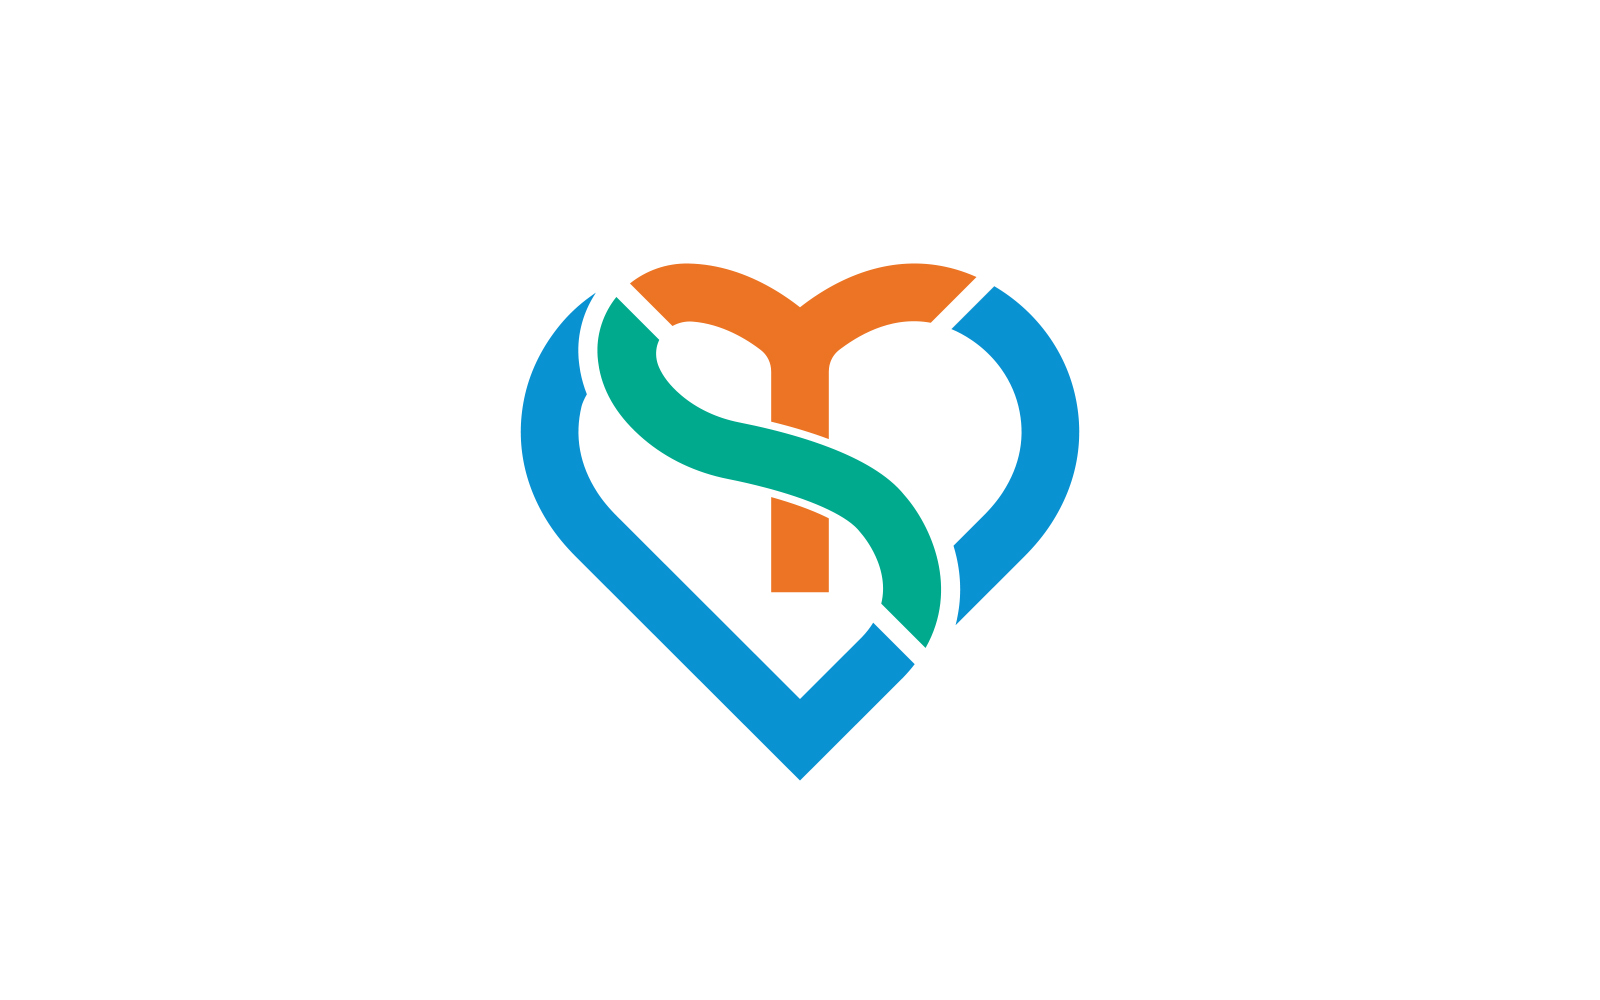 TS Love | Letter TS Love Logo